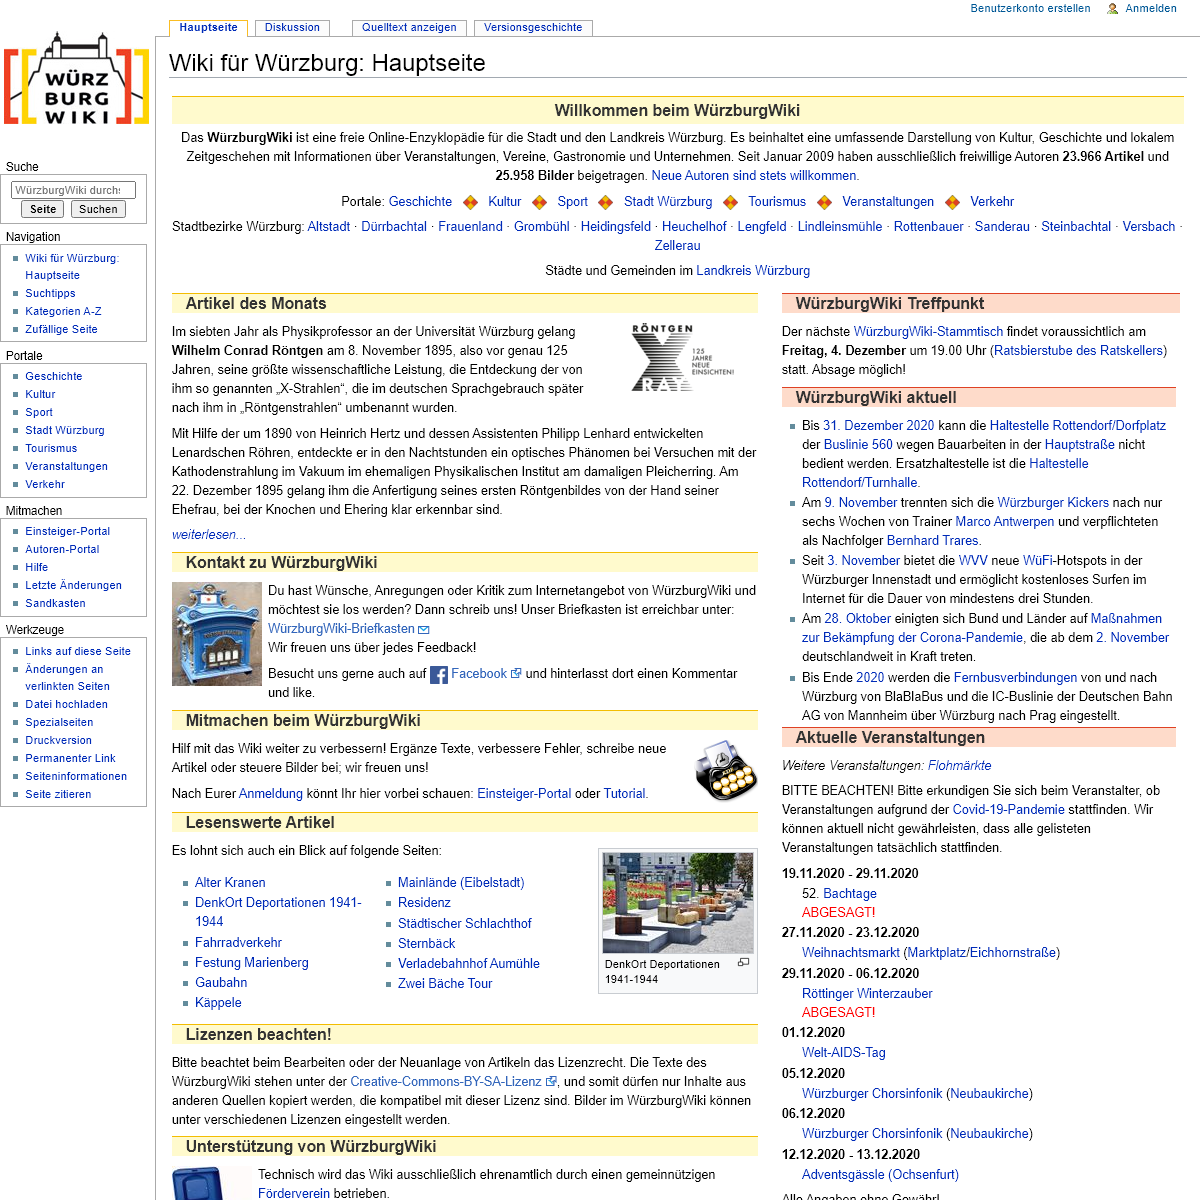 A complete backup of wuerzburgwiki.de